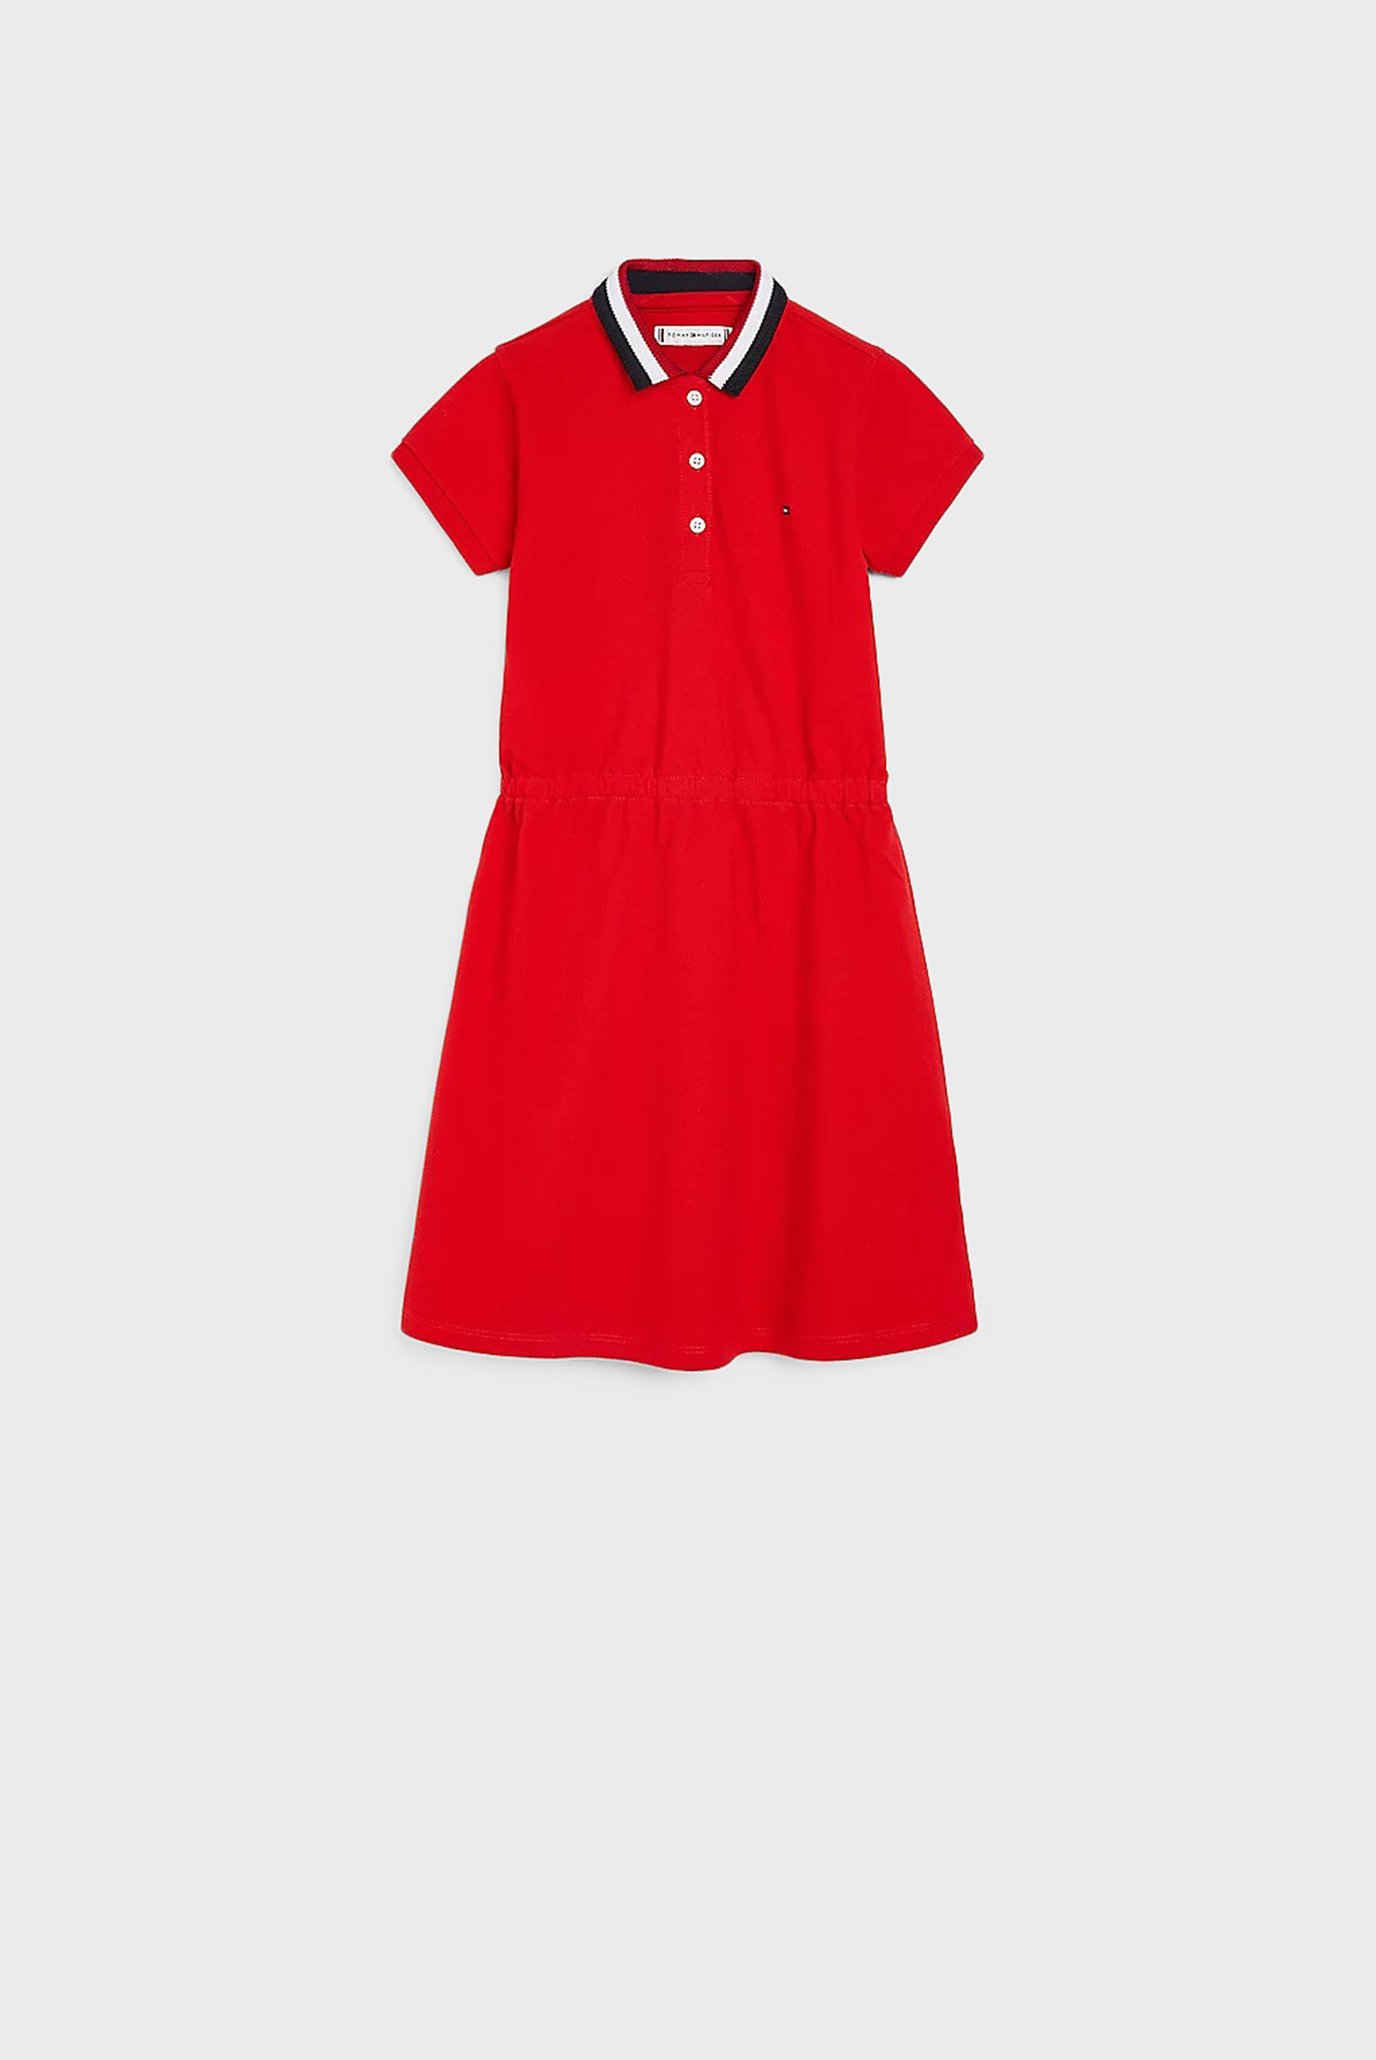 Дитяча червона сукня ESSENTIAL POLO 1